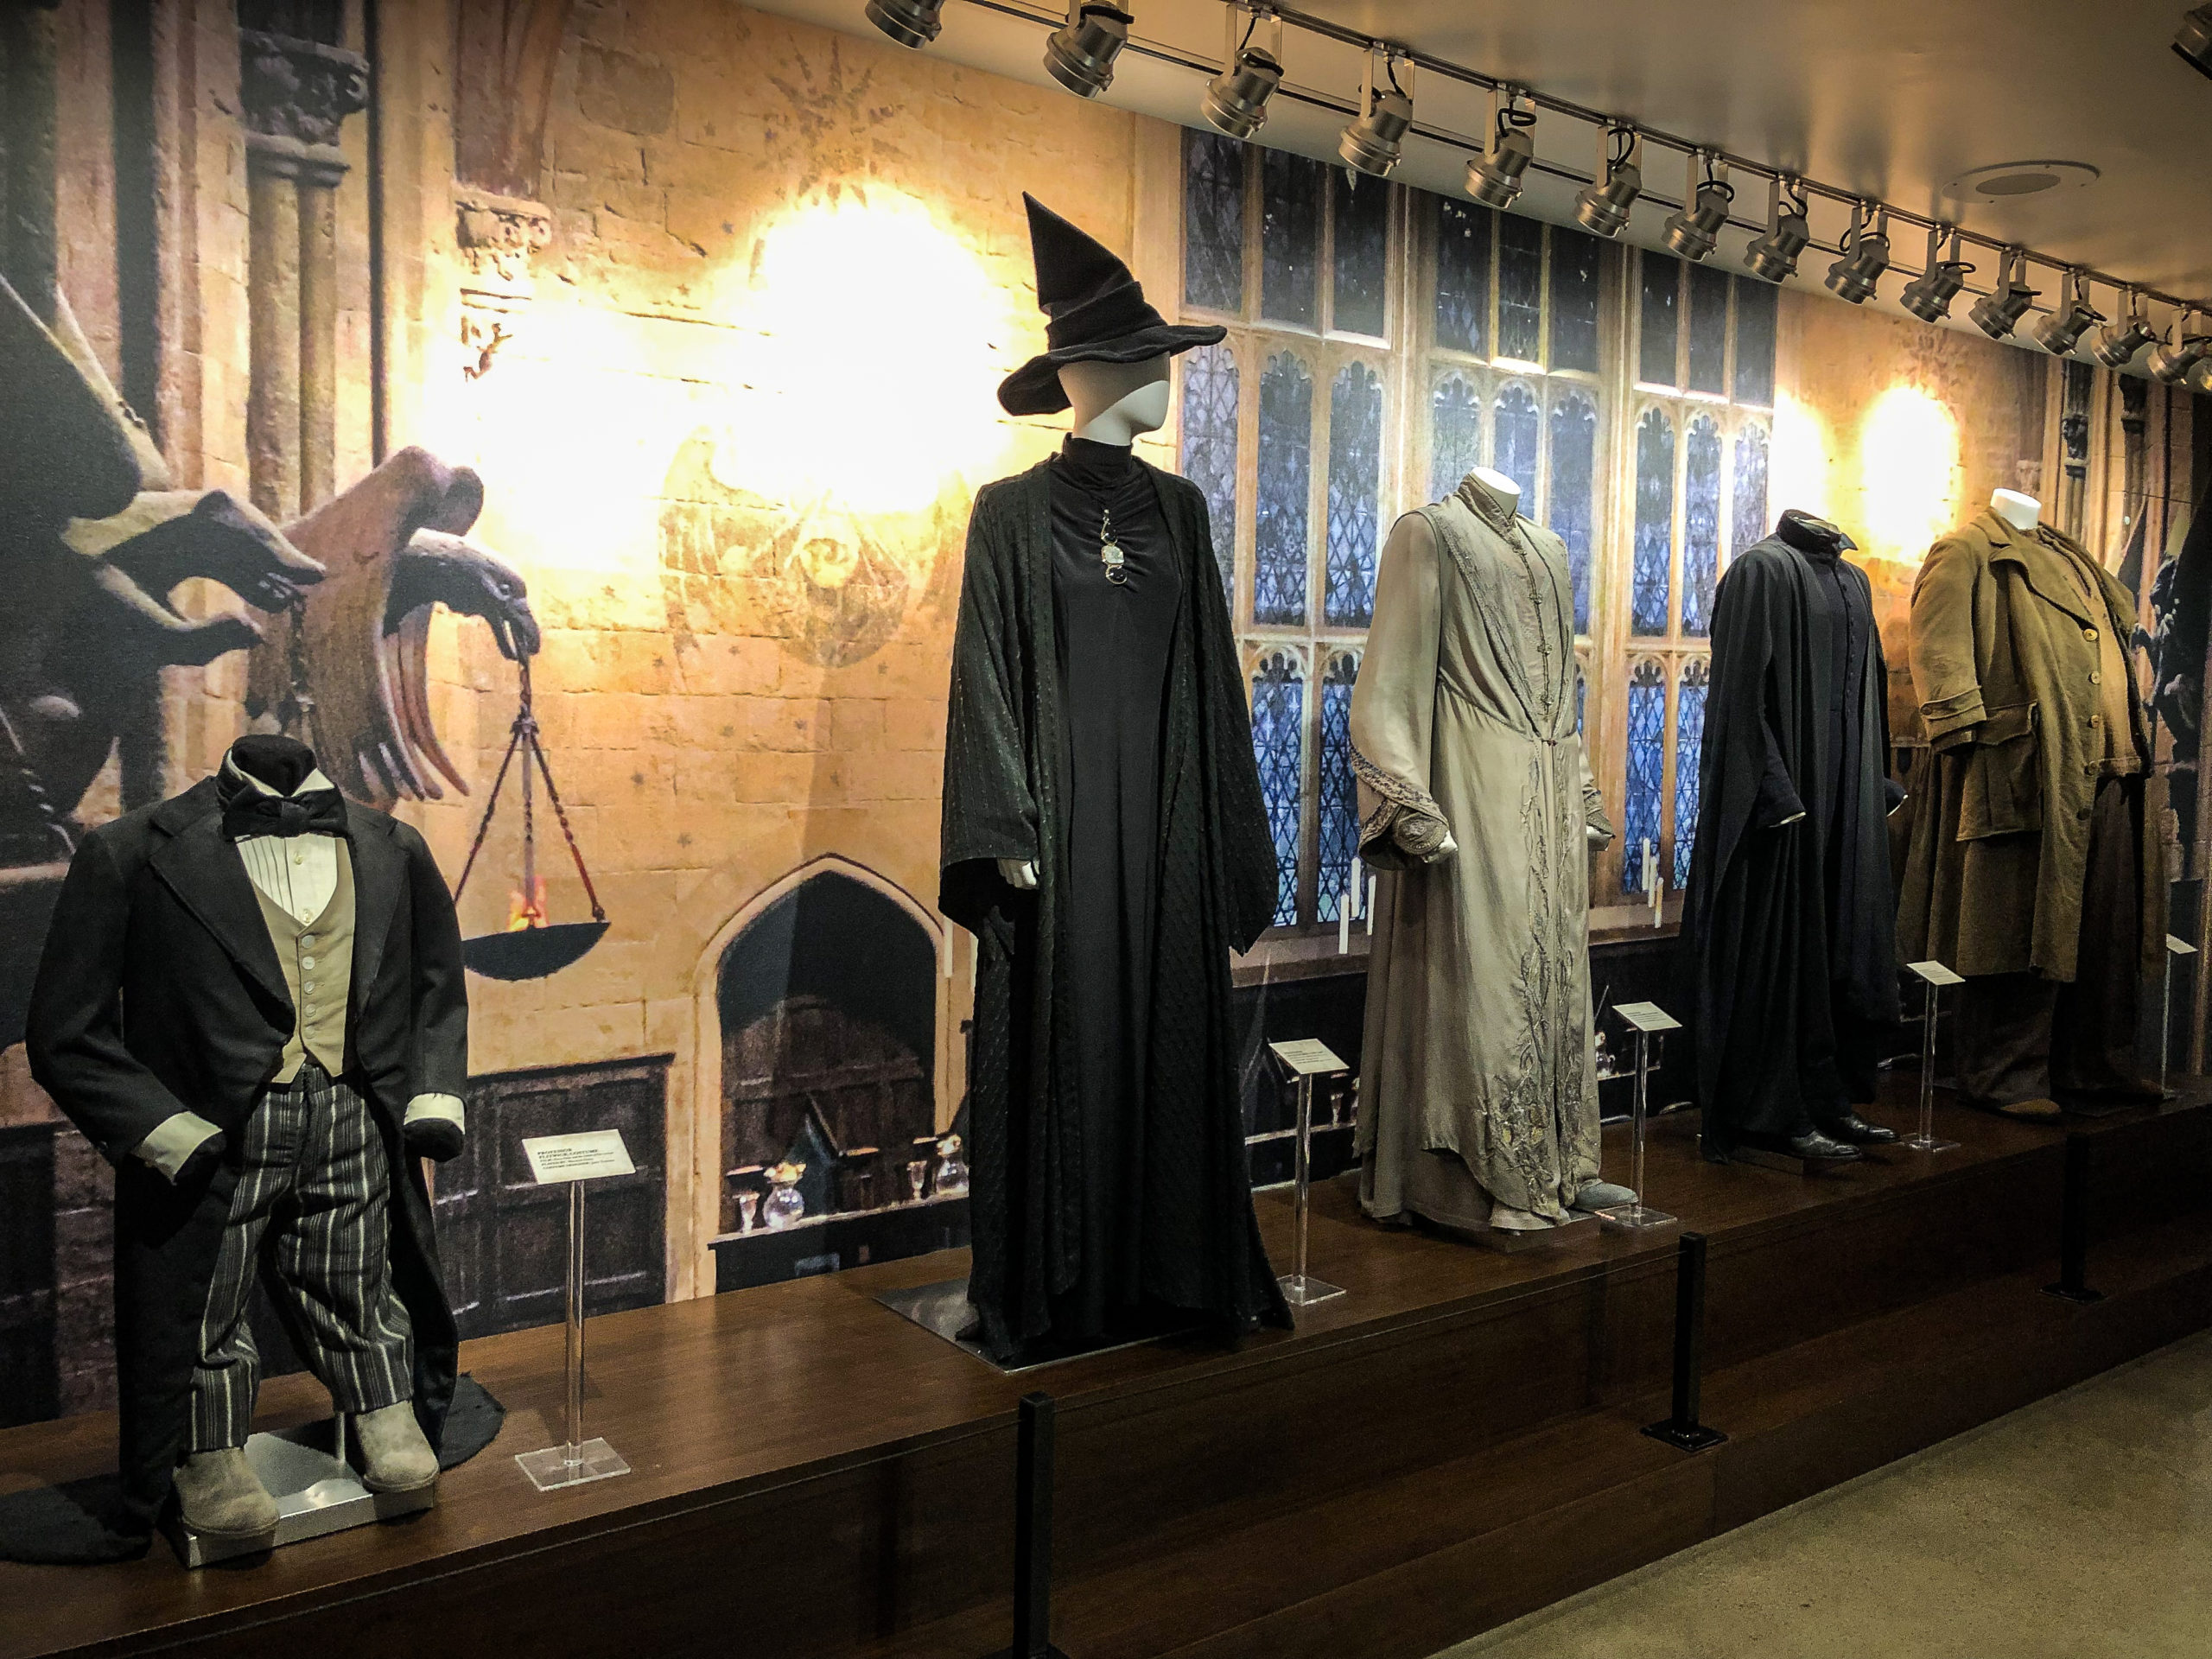 Harry Potter wardrobes in the Warner Bros Studios in Los Angeles